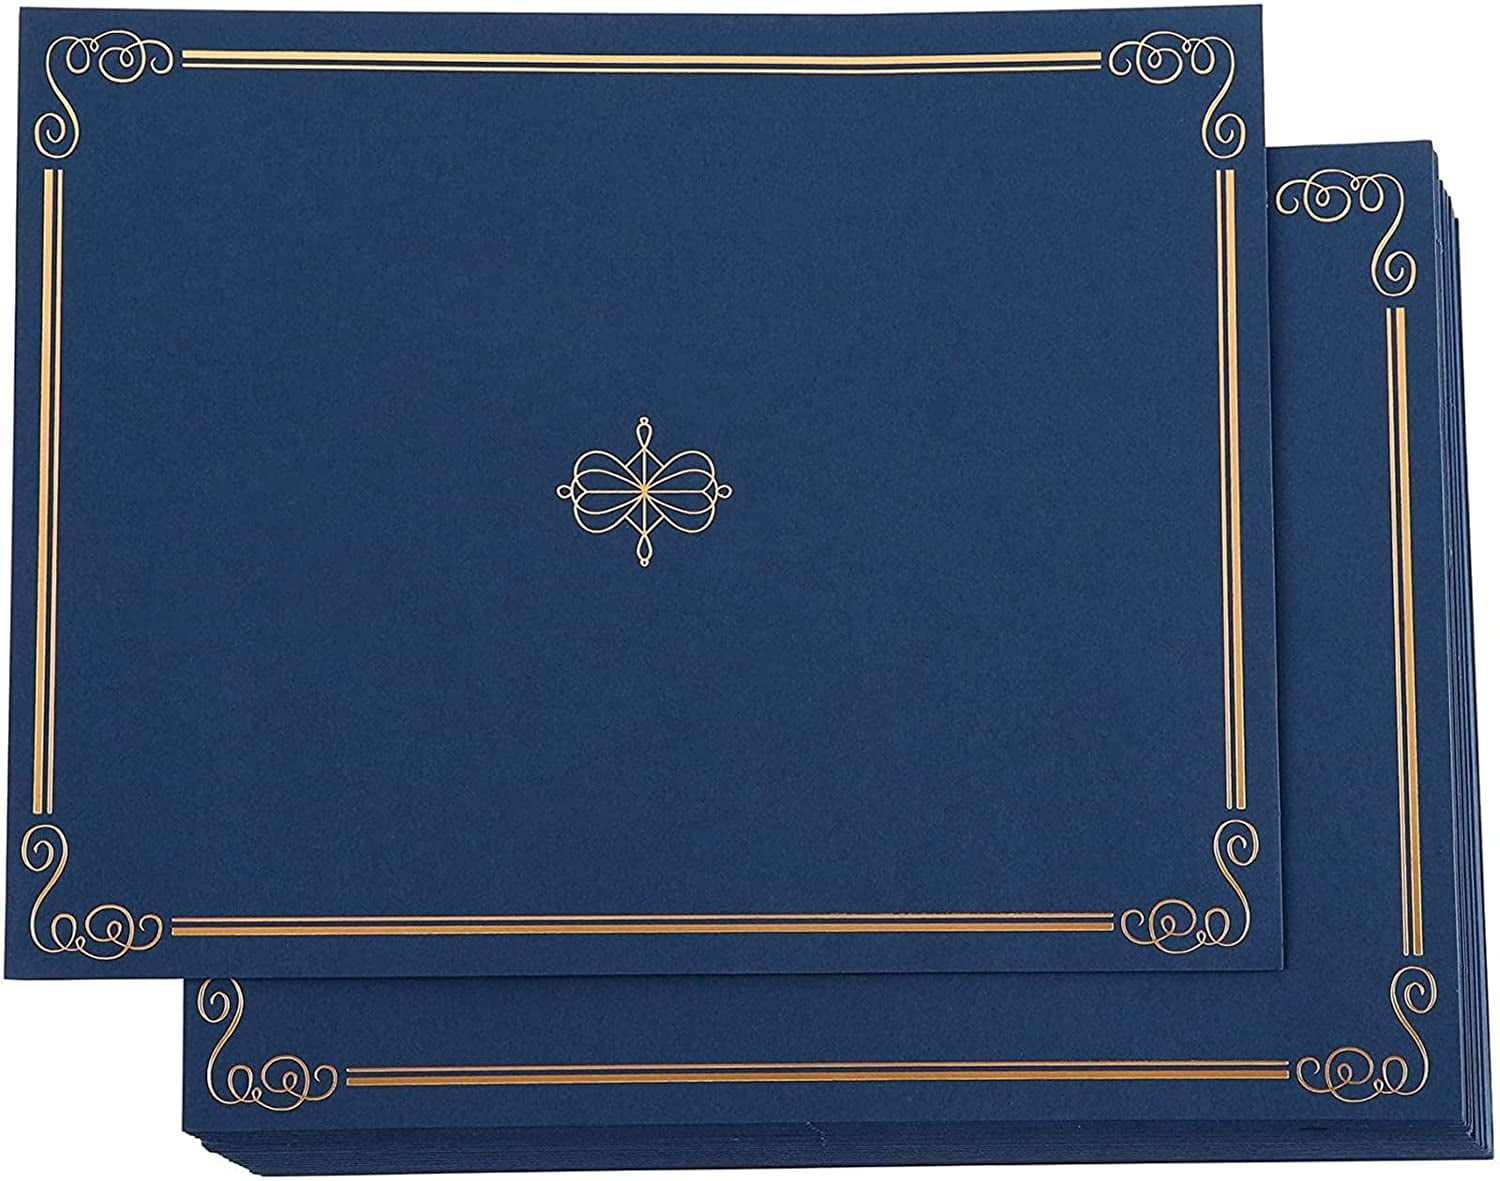 Navy Blue Laurel Foil Certificate Cover 25 Pack Diploma Holders for Letter Size Paper 8.5 x 11 